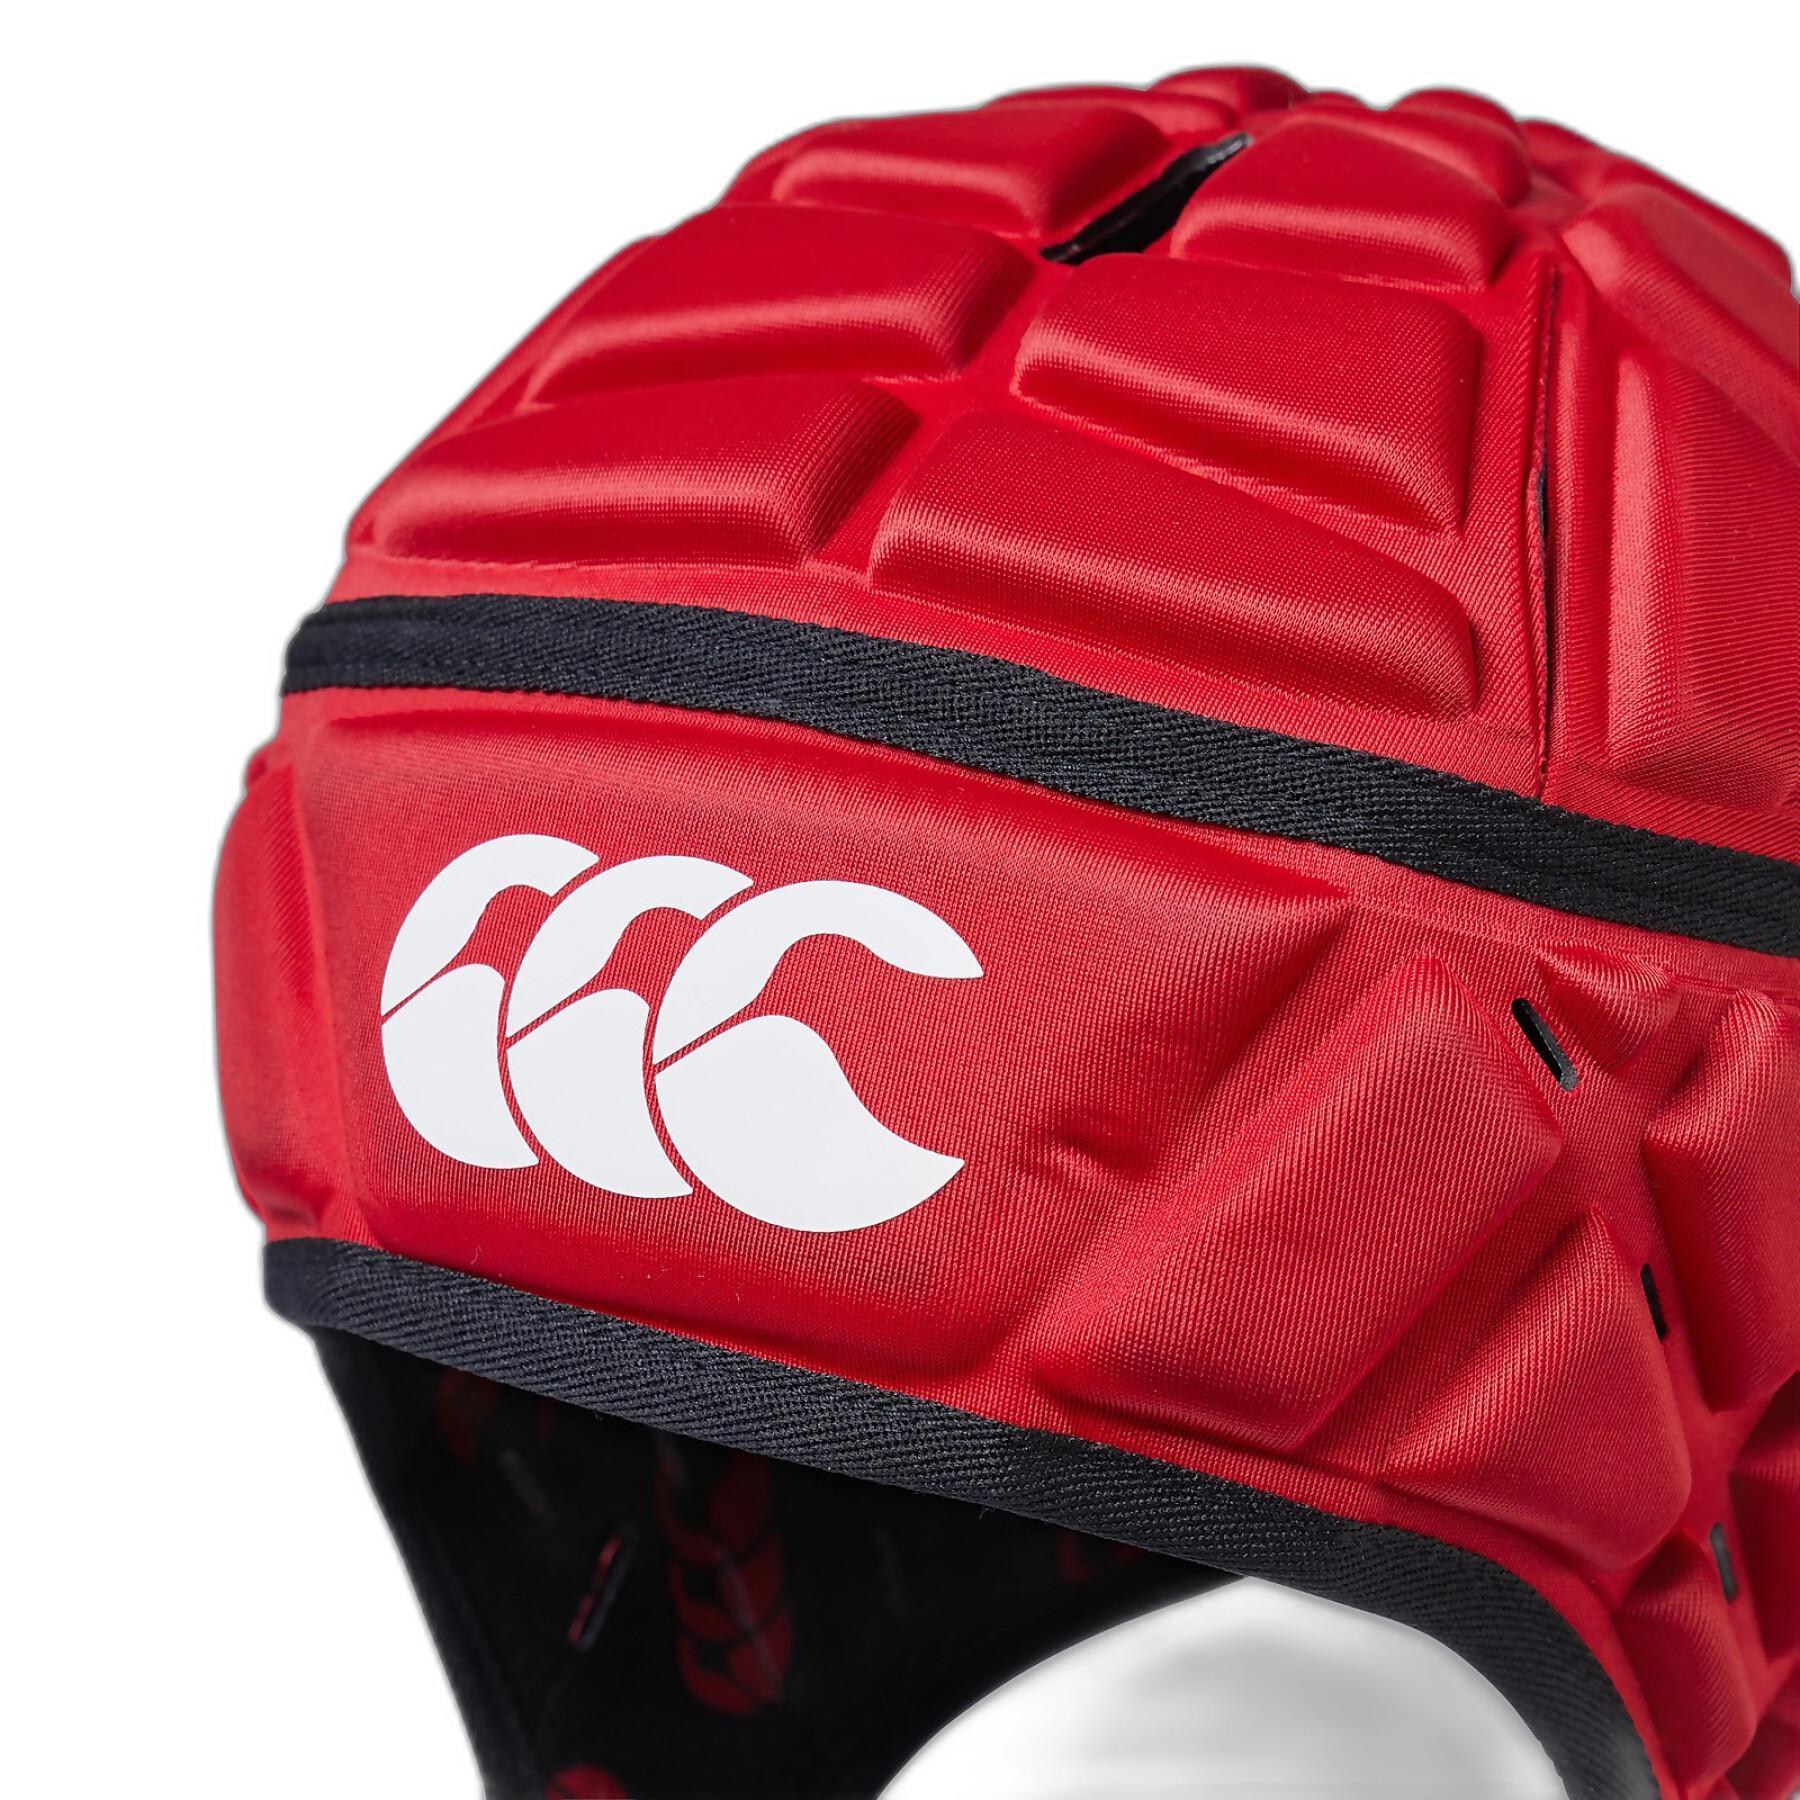 Child rugby helmet Canterbury Raze